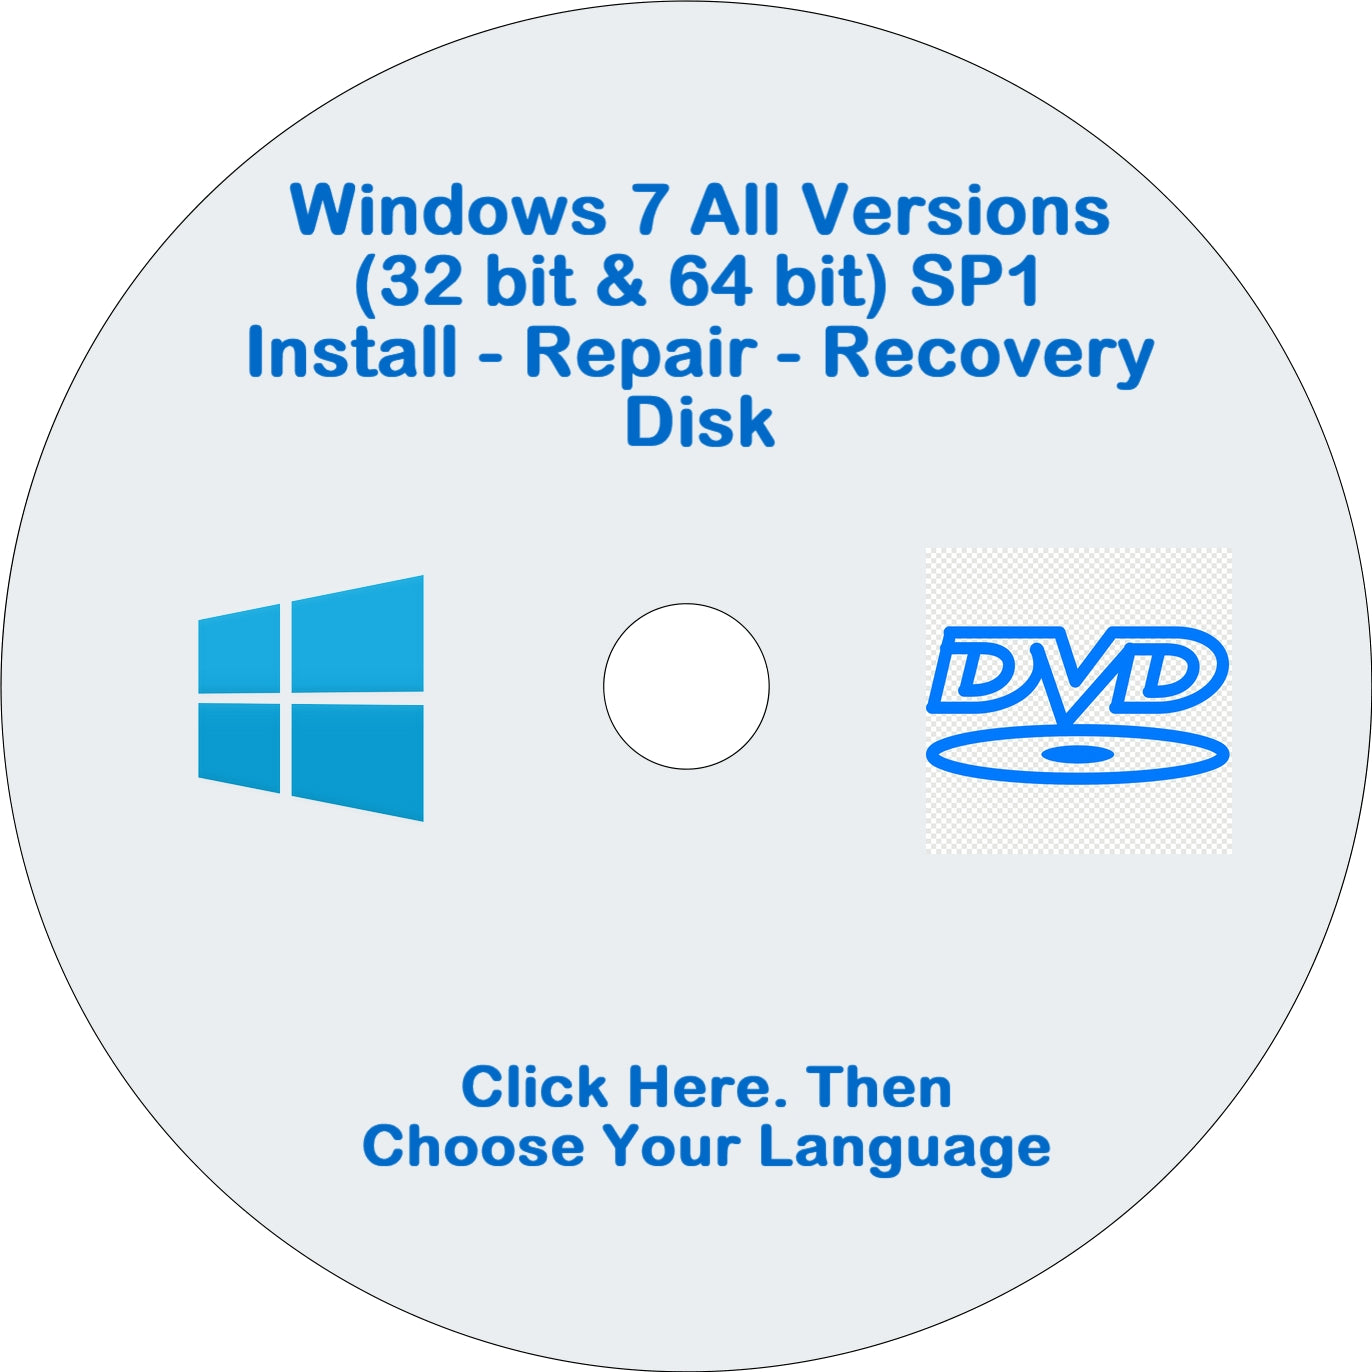 Windows 7 All Versions Disk 32 Bit+64 Bit